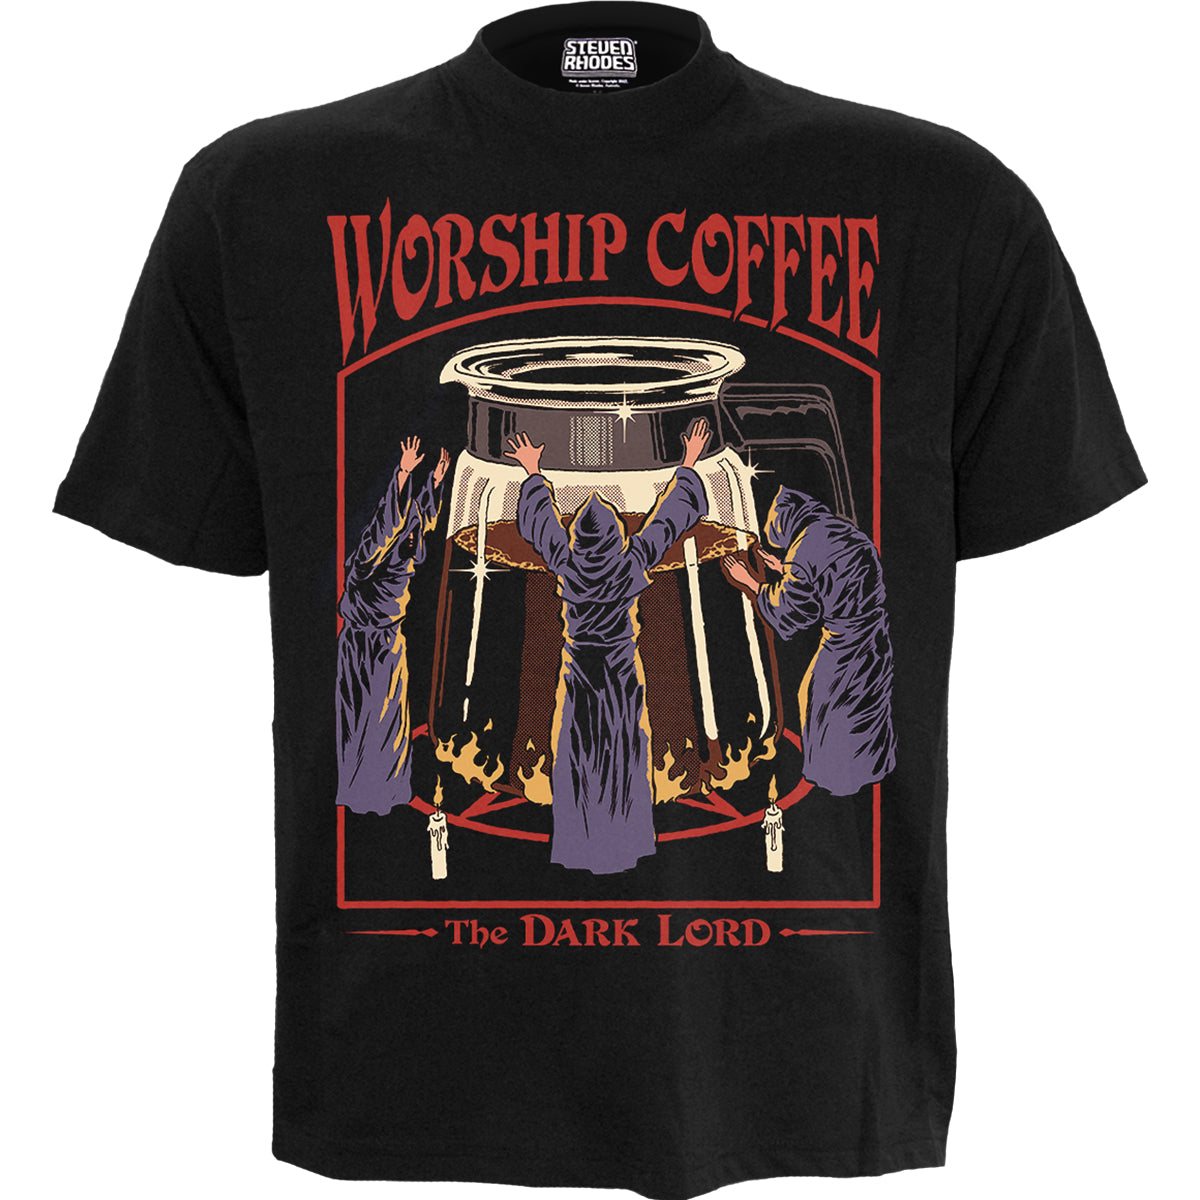 STEVEN RHODES - WORSHIP COFFEE - Front Print T-Shirt Black